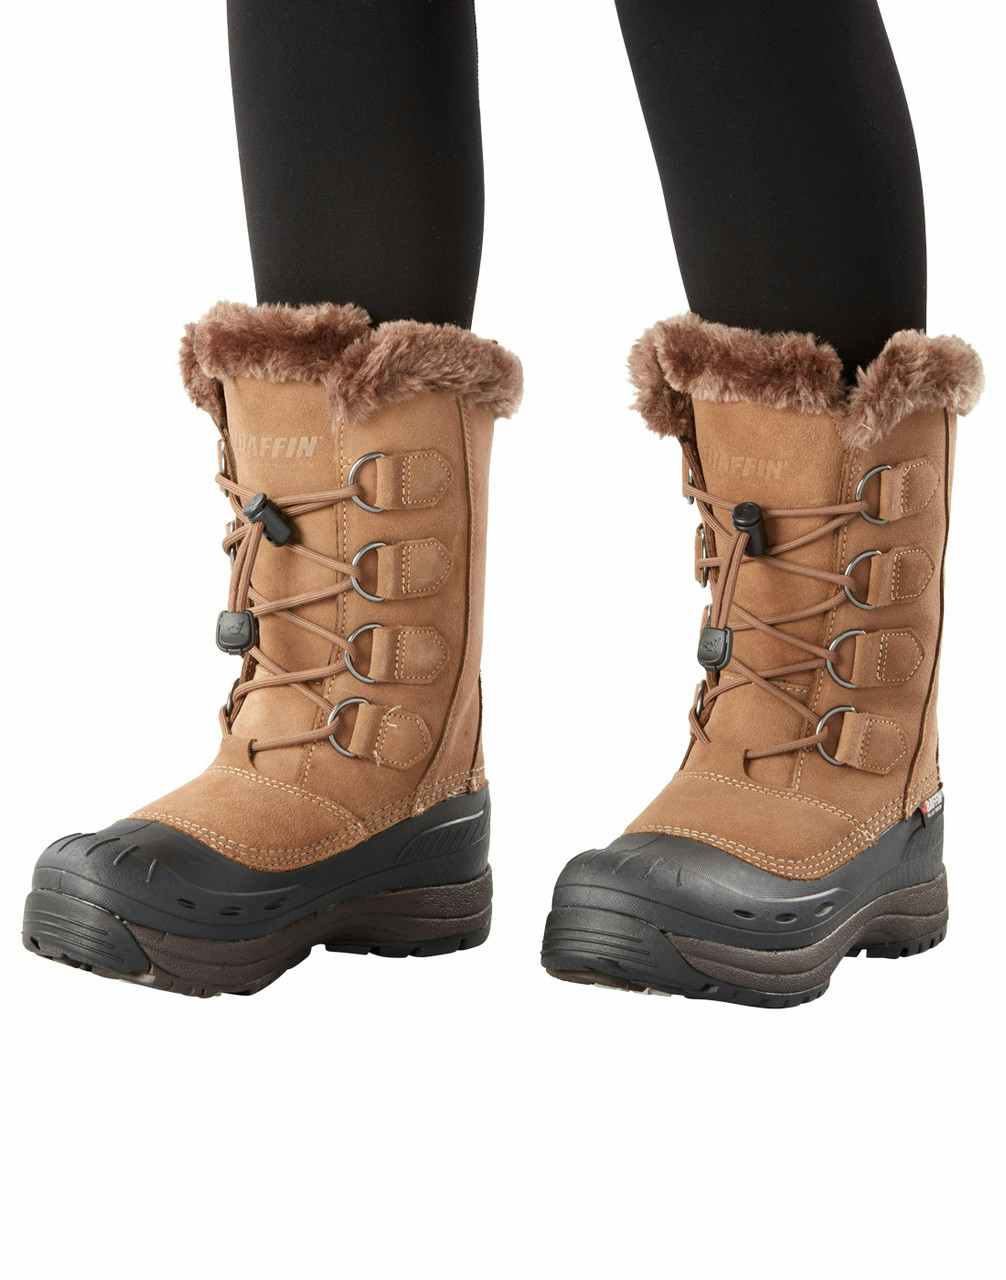 Chloe Waterproof Winter Boots Taupe